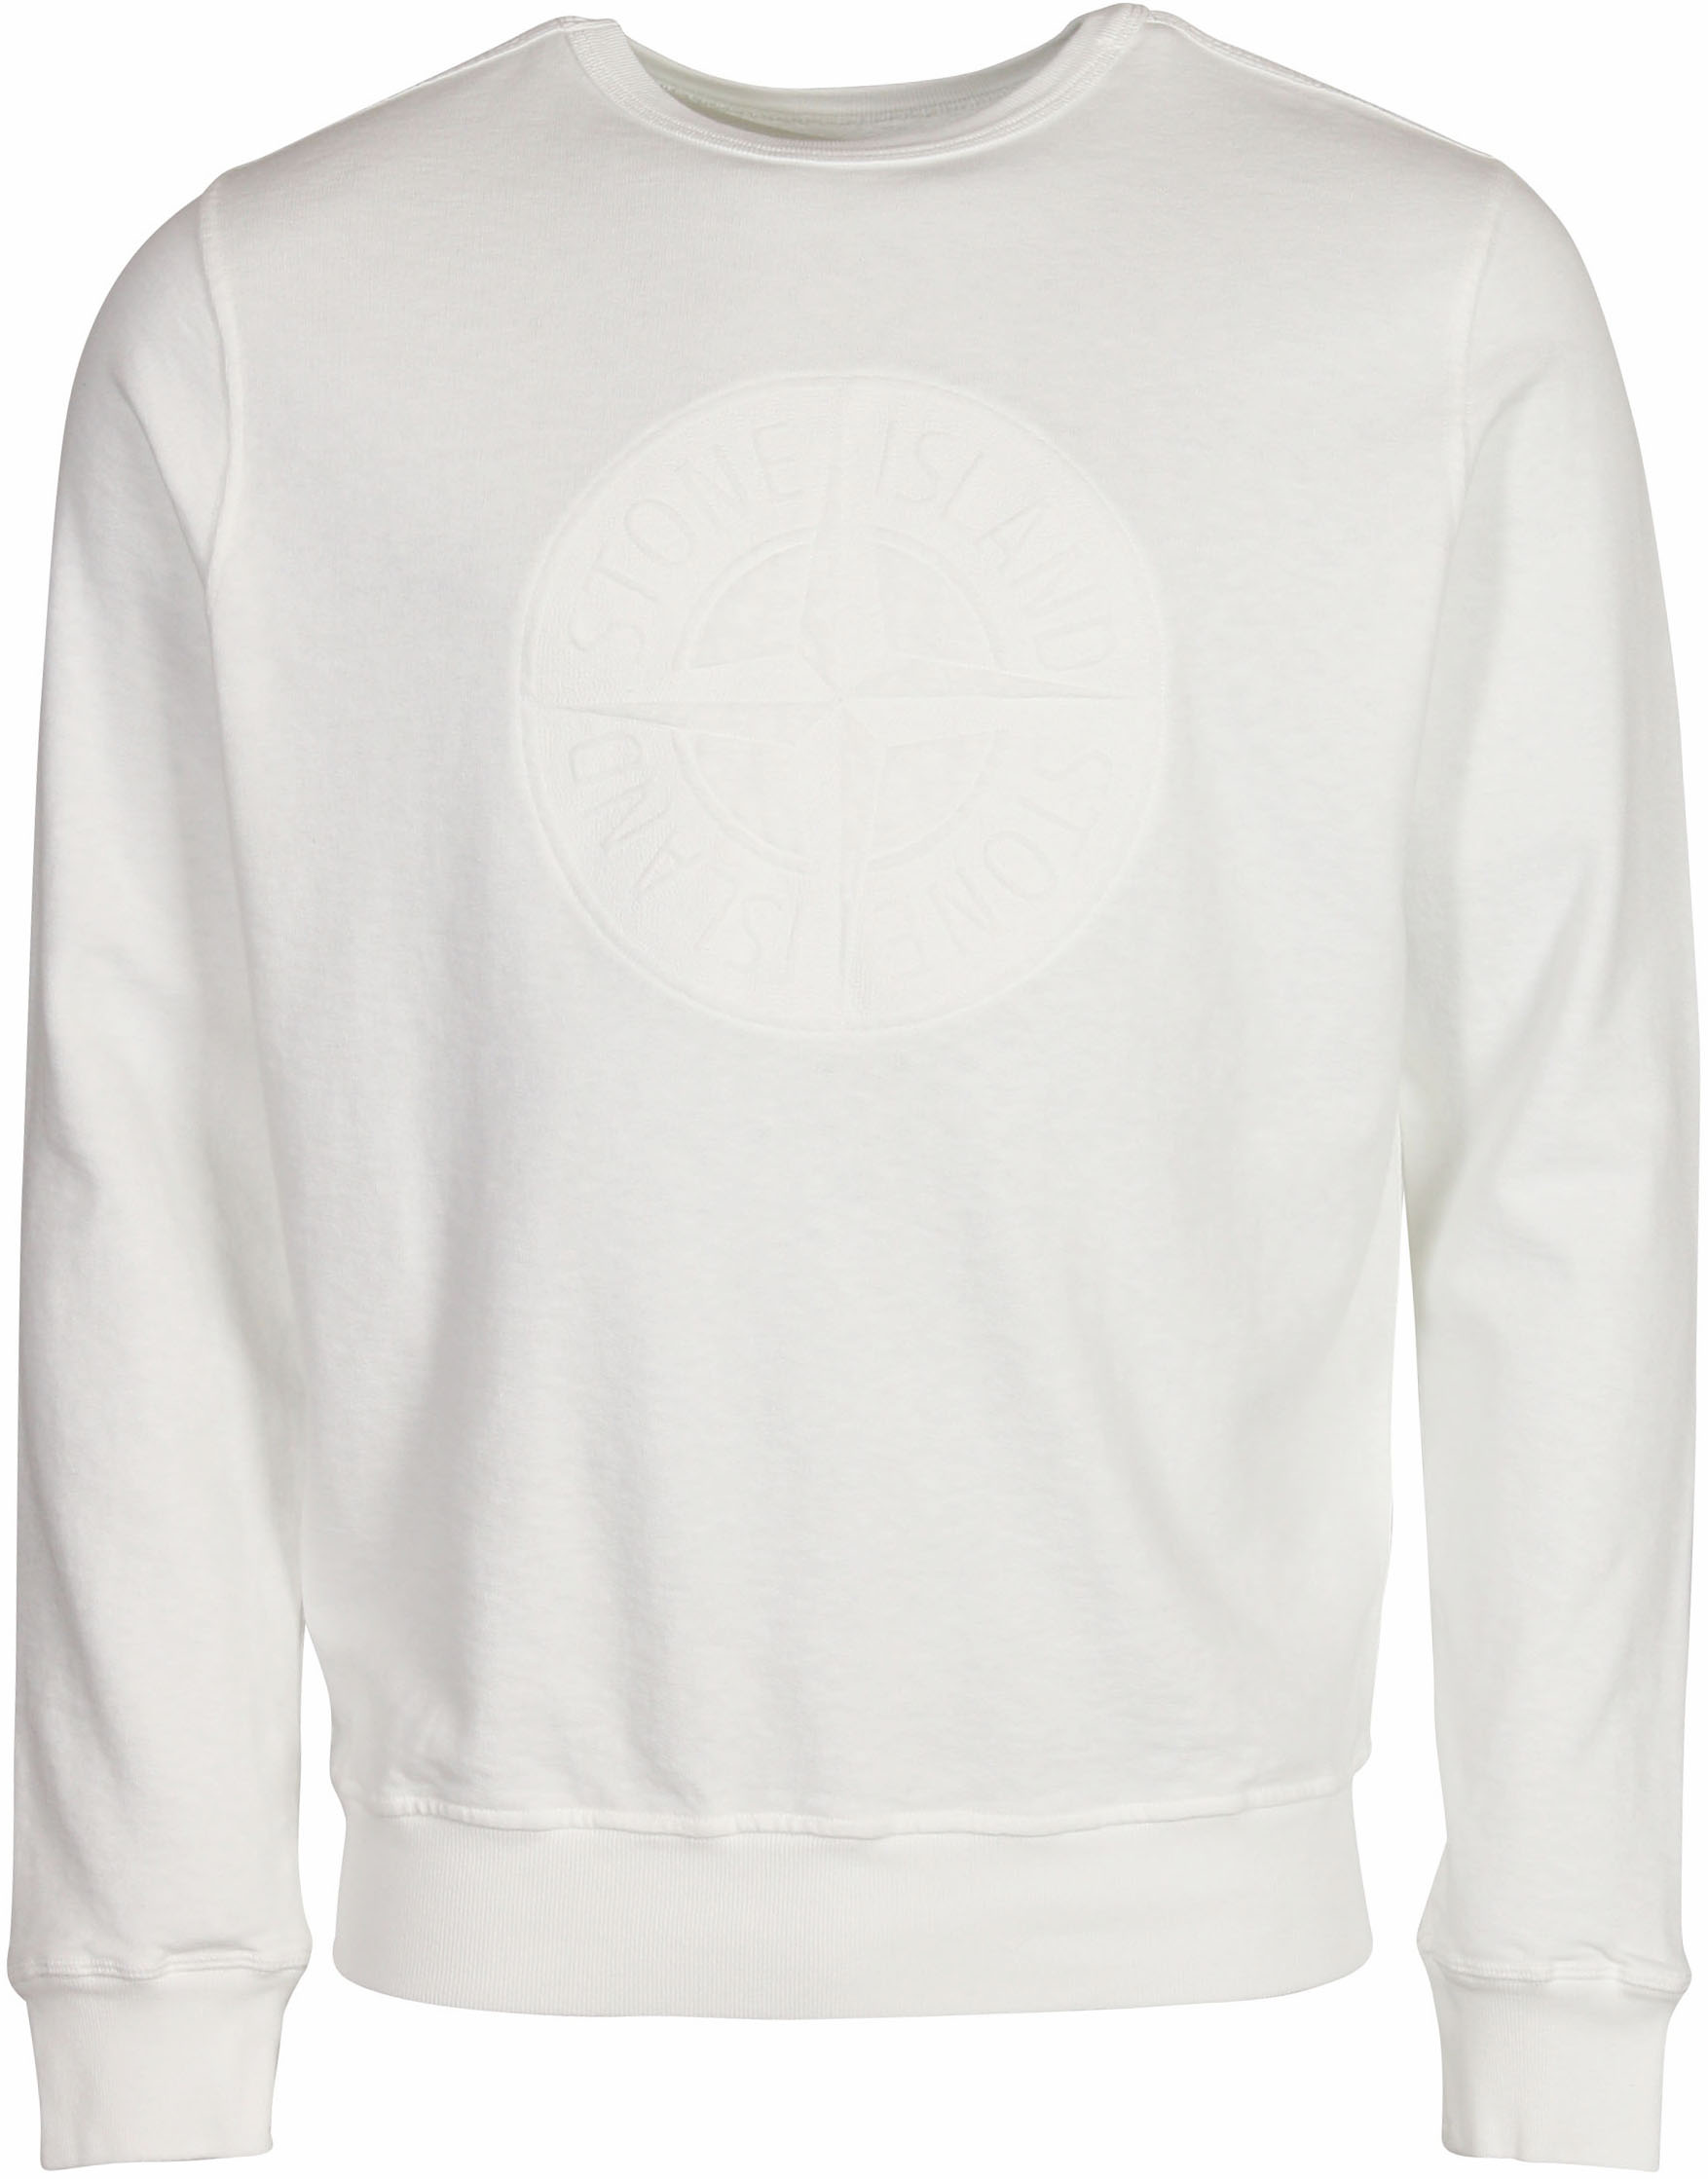 Stone Island Reversible Sweatshirt White Printed